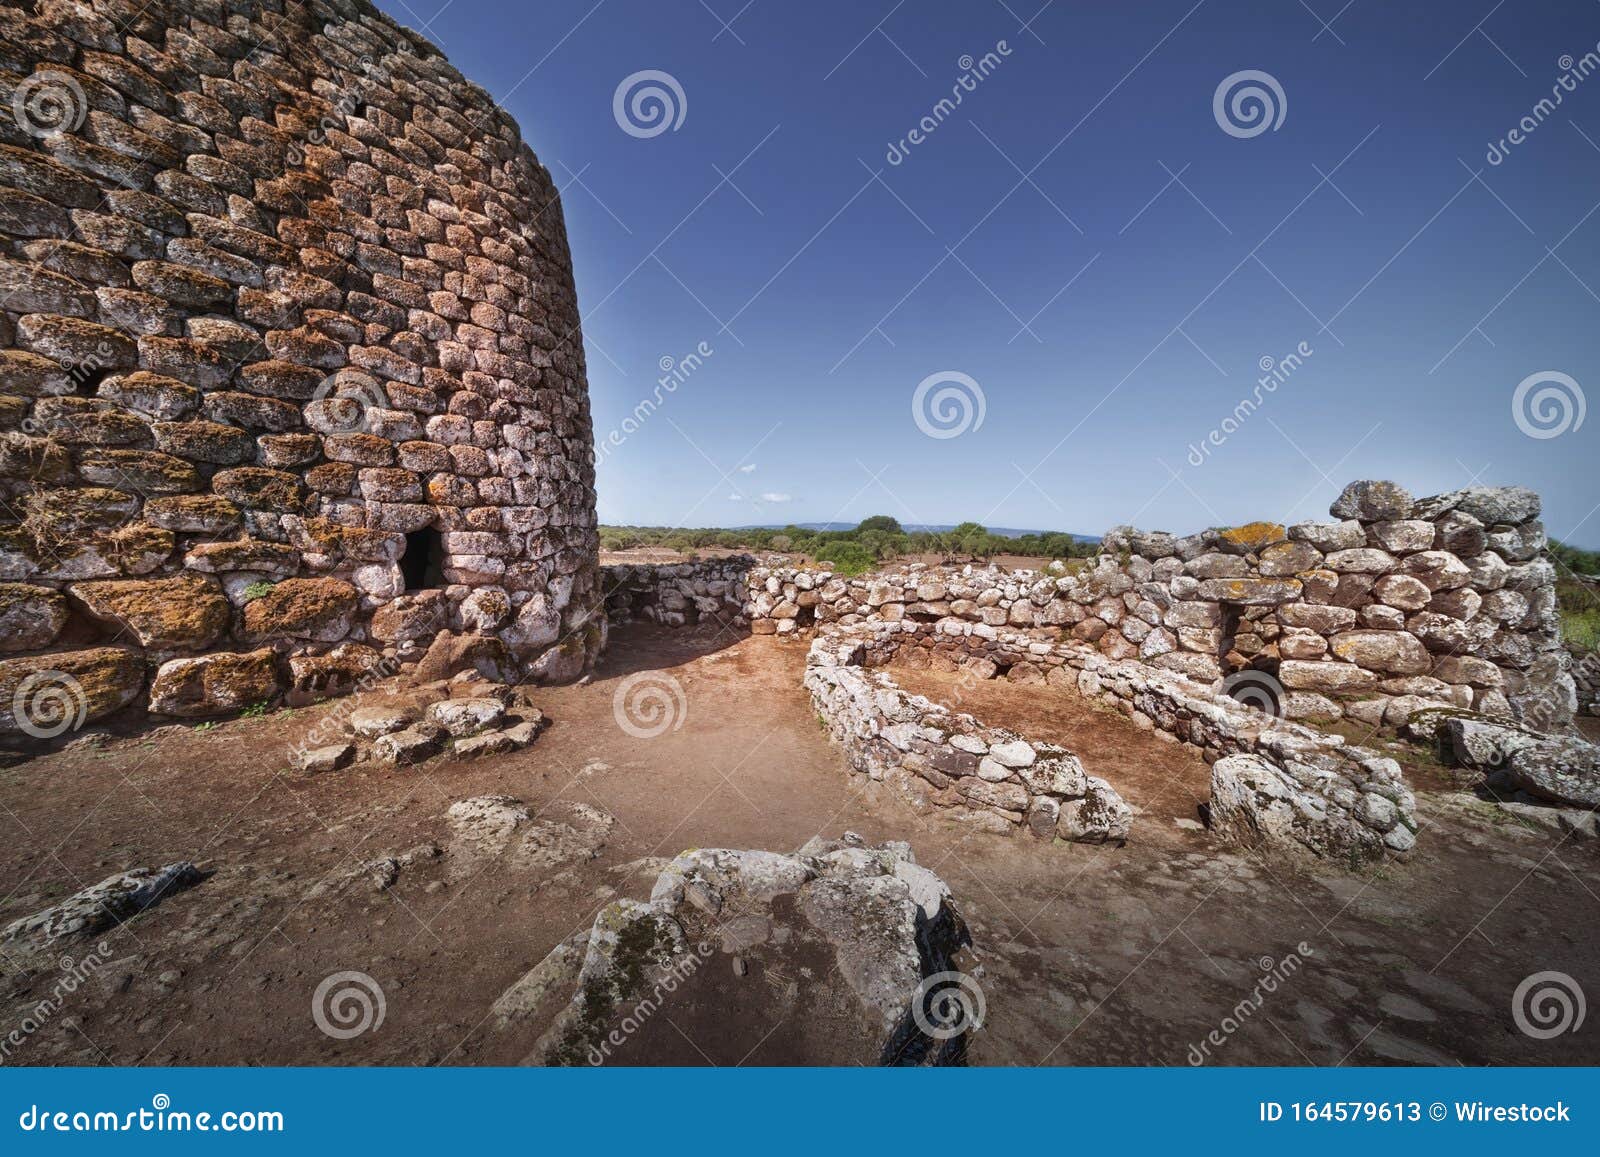 historical castle near rock formations under the clear sky in su nuraxi, sardinia, italy